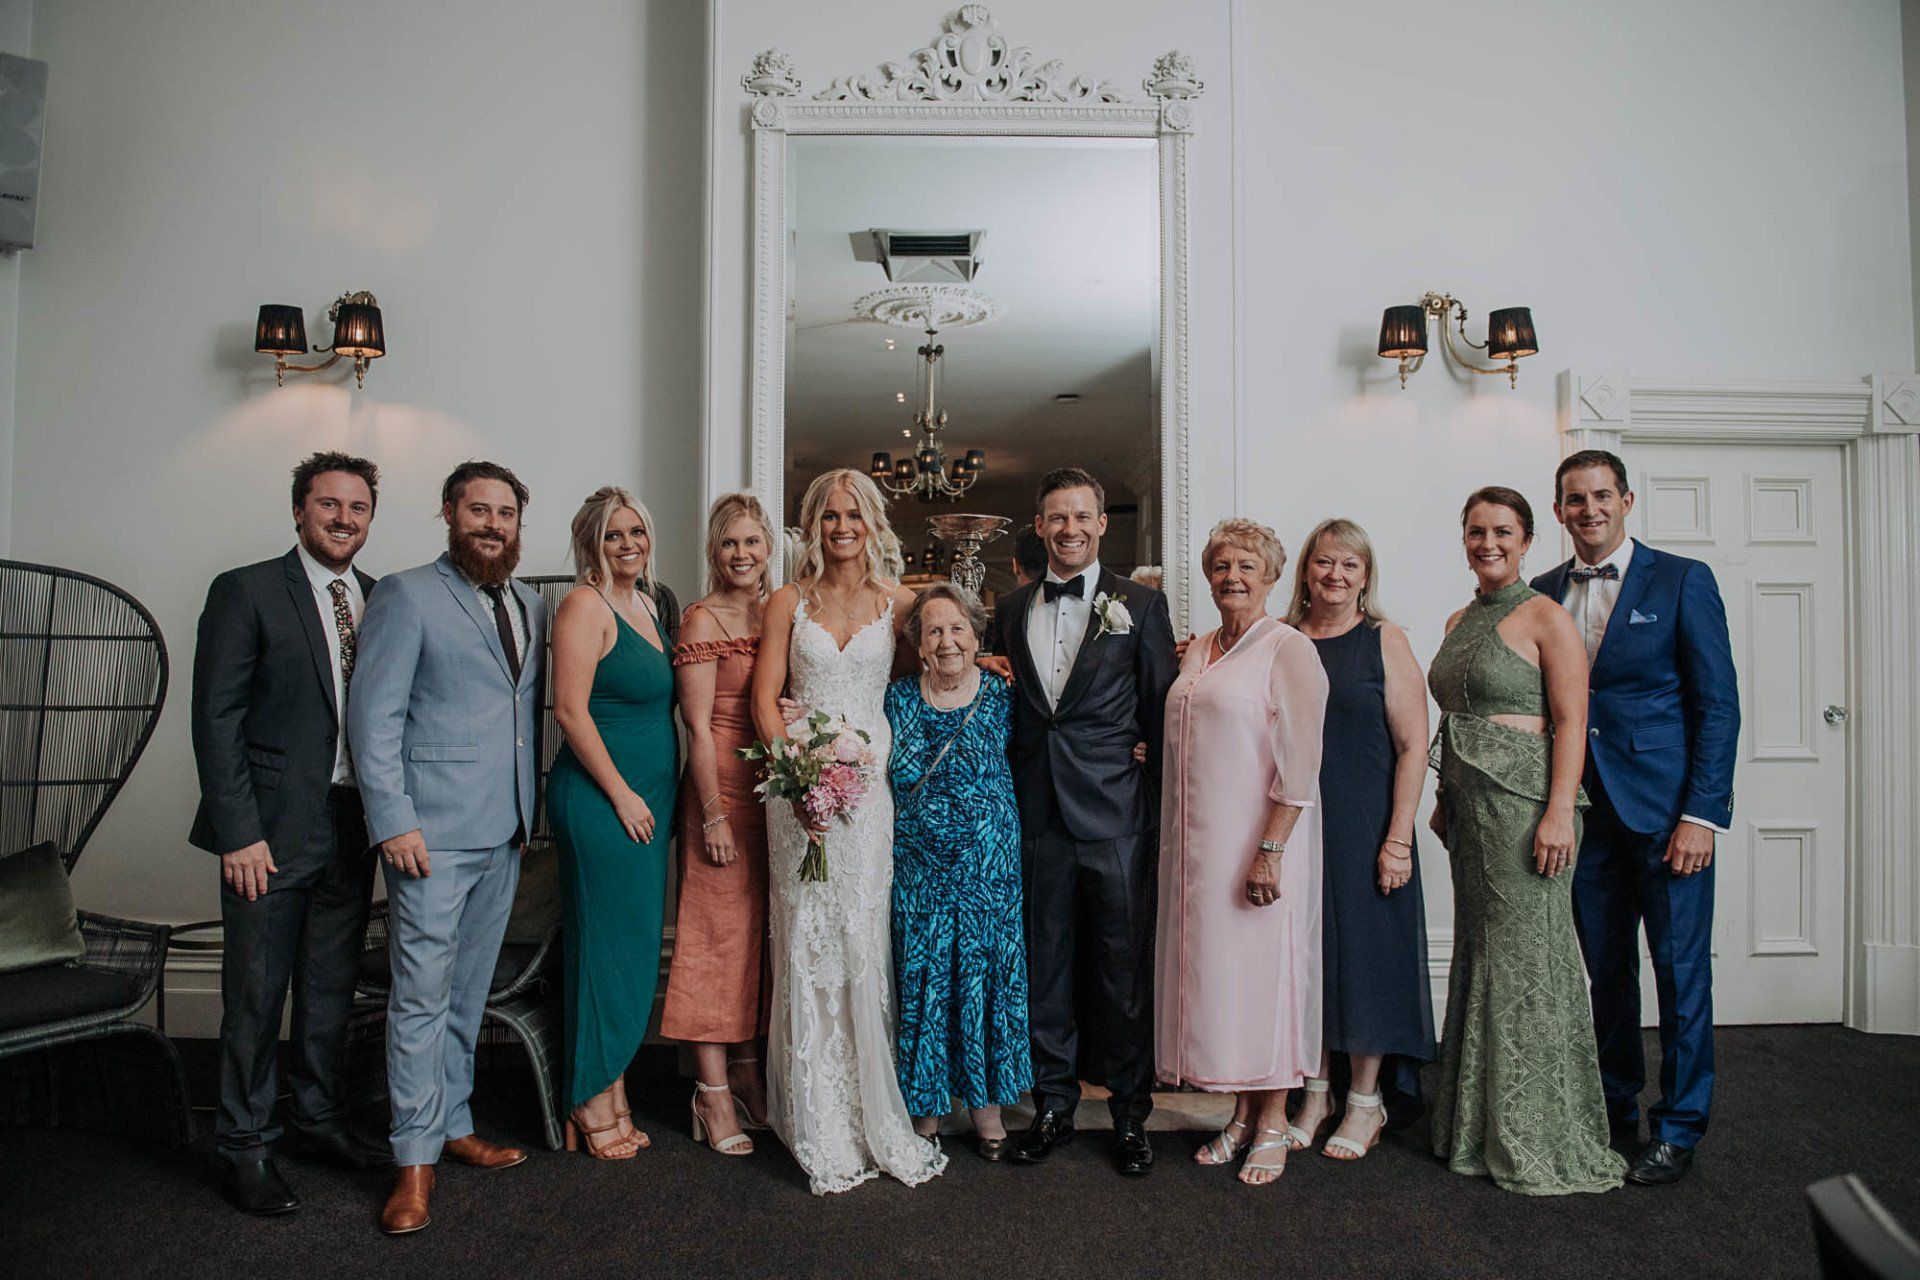 Family photos on a wedding day